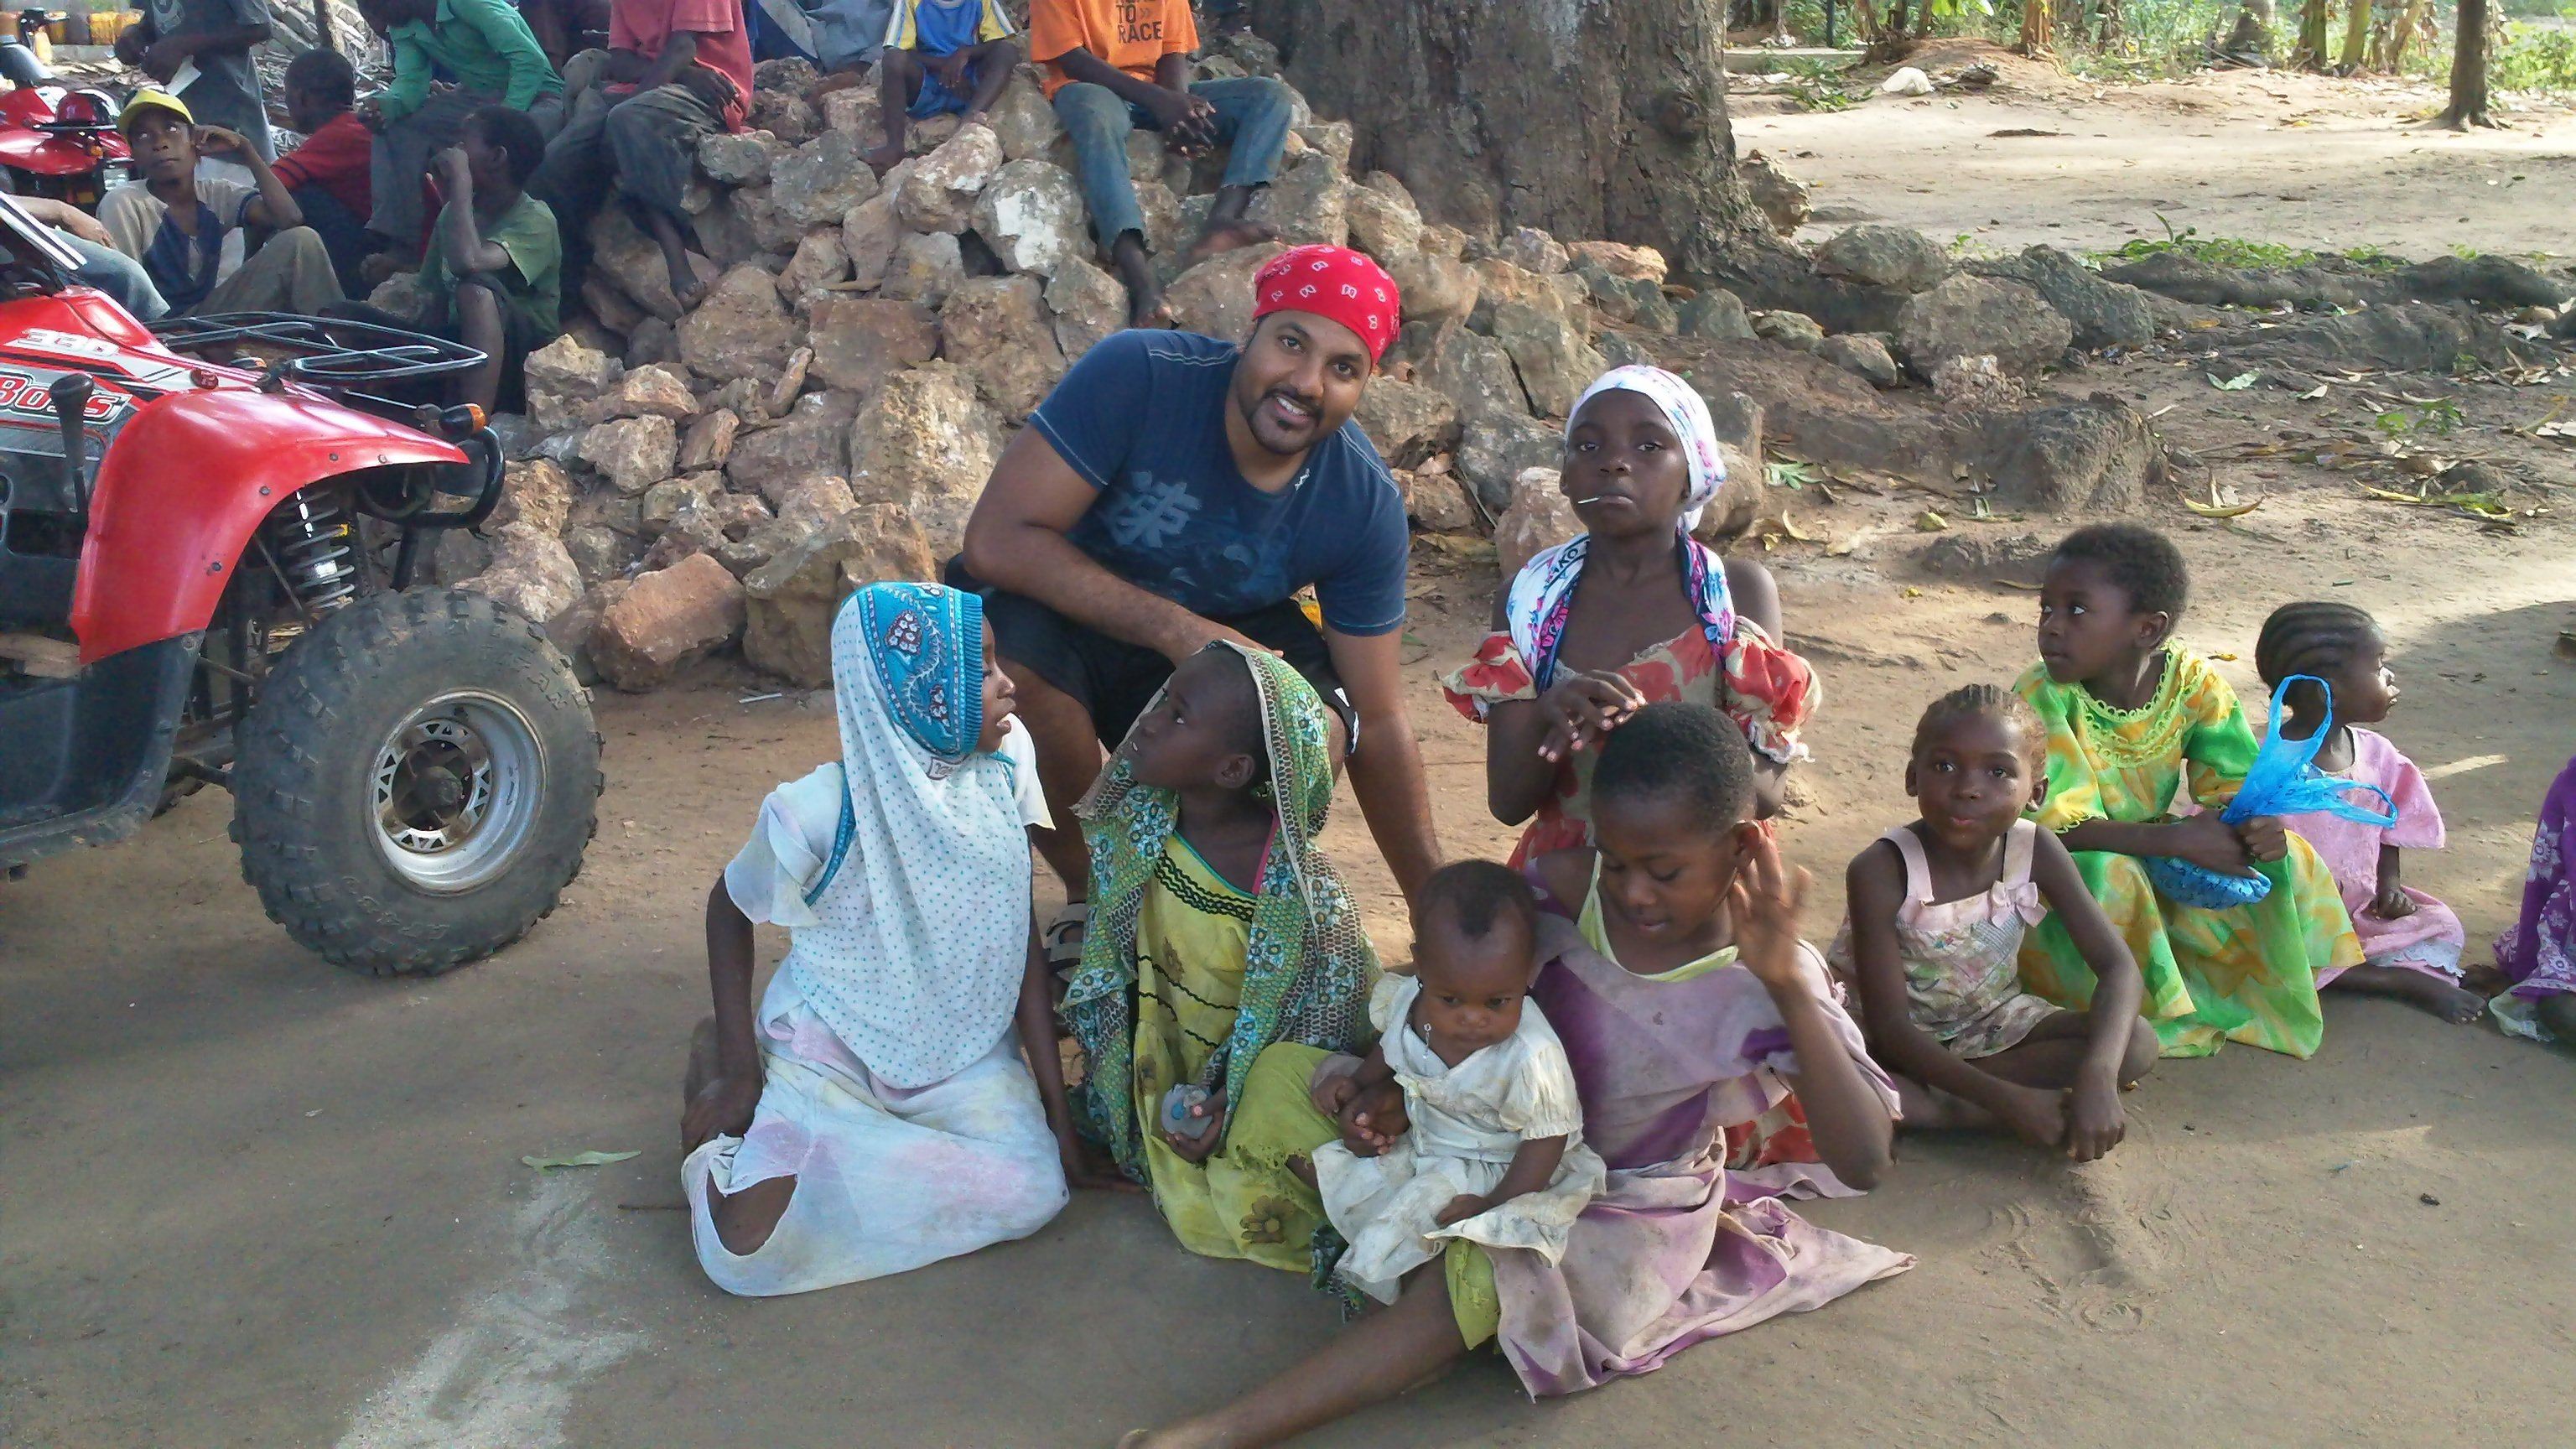 Muneer at a village in Tanzania